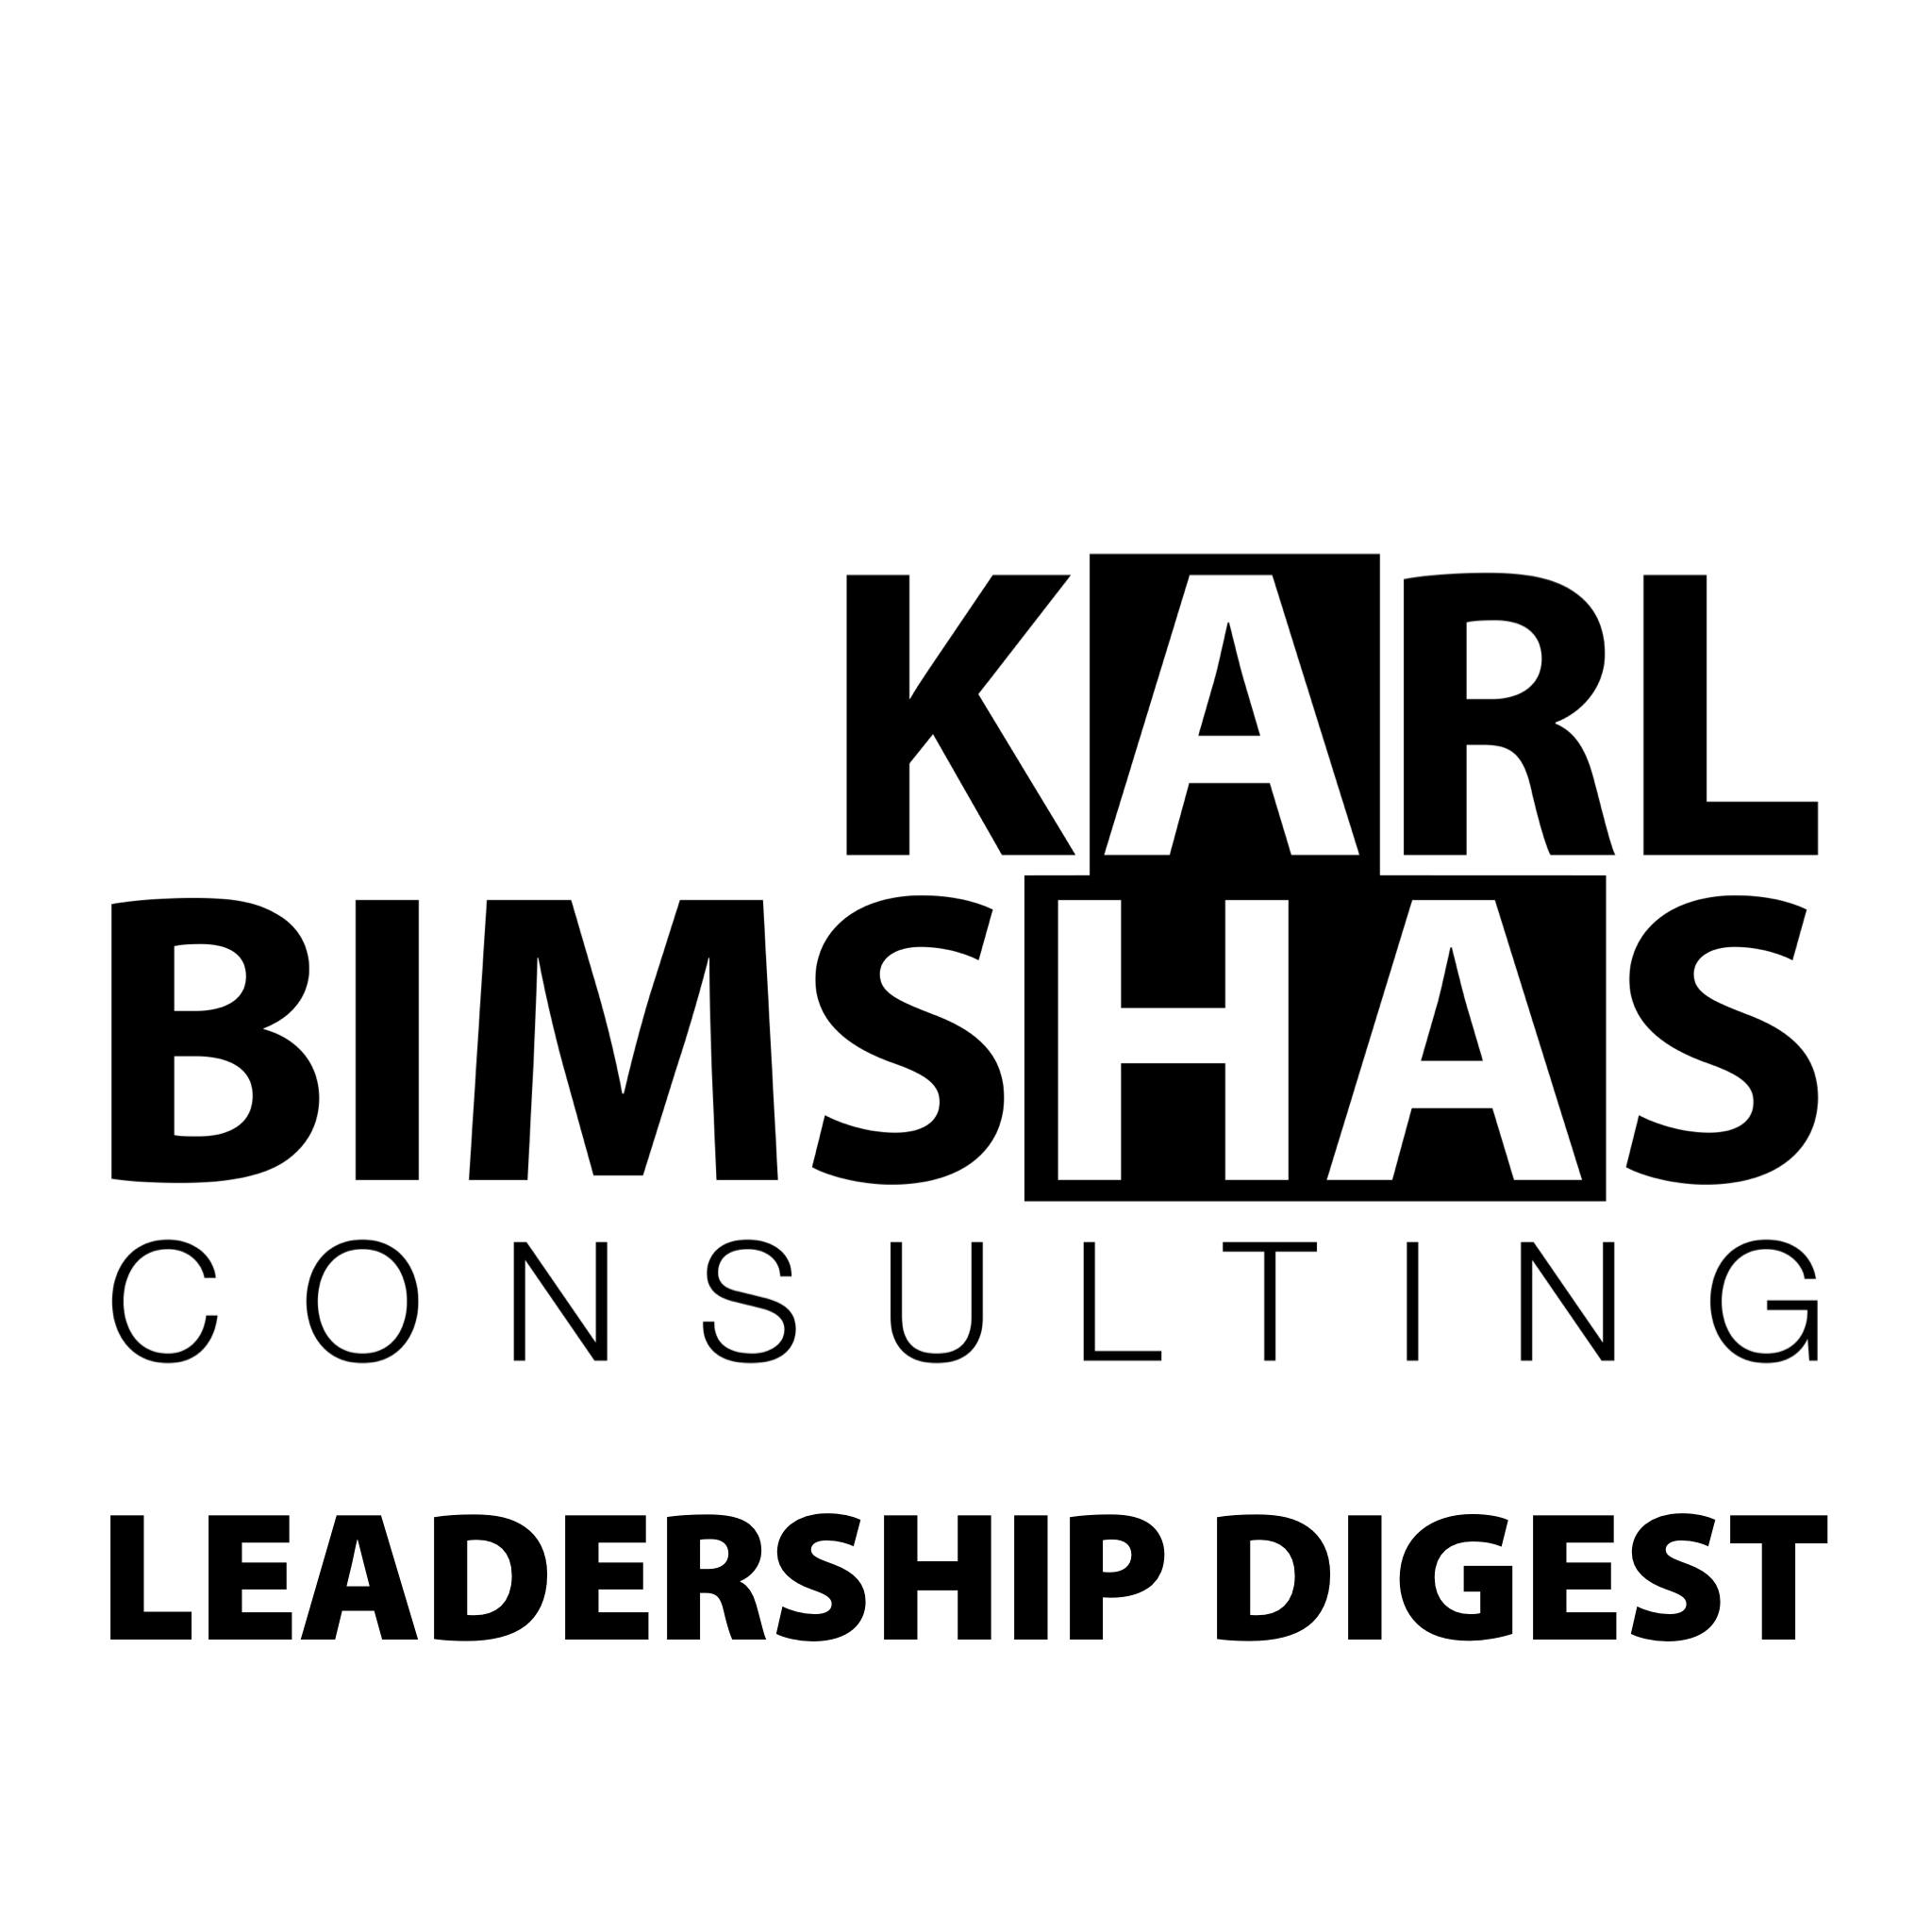 Karl Bimshas Consulting's Leadership Digest